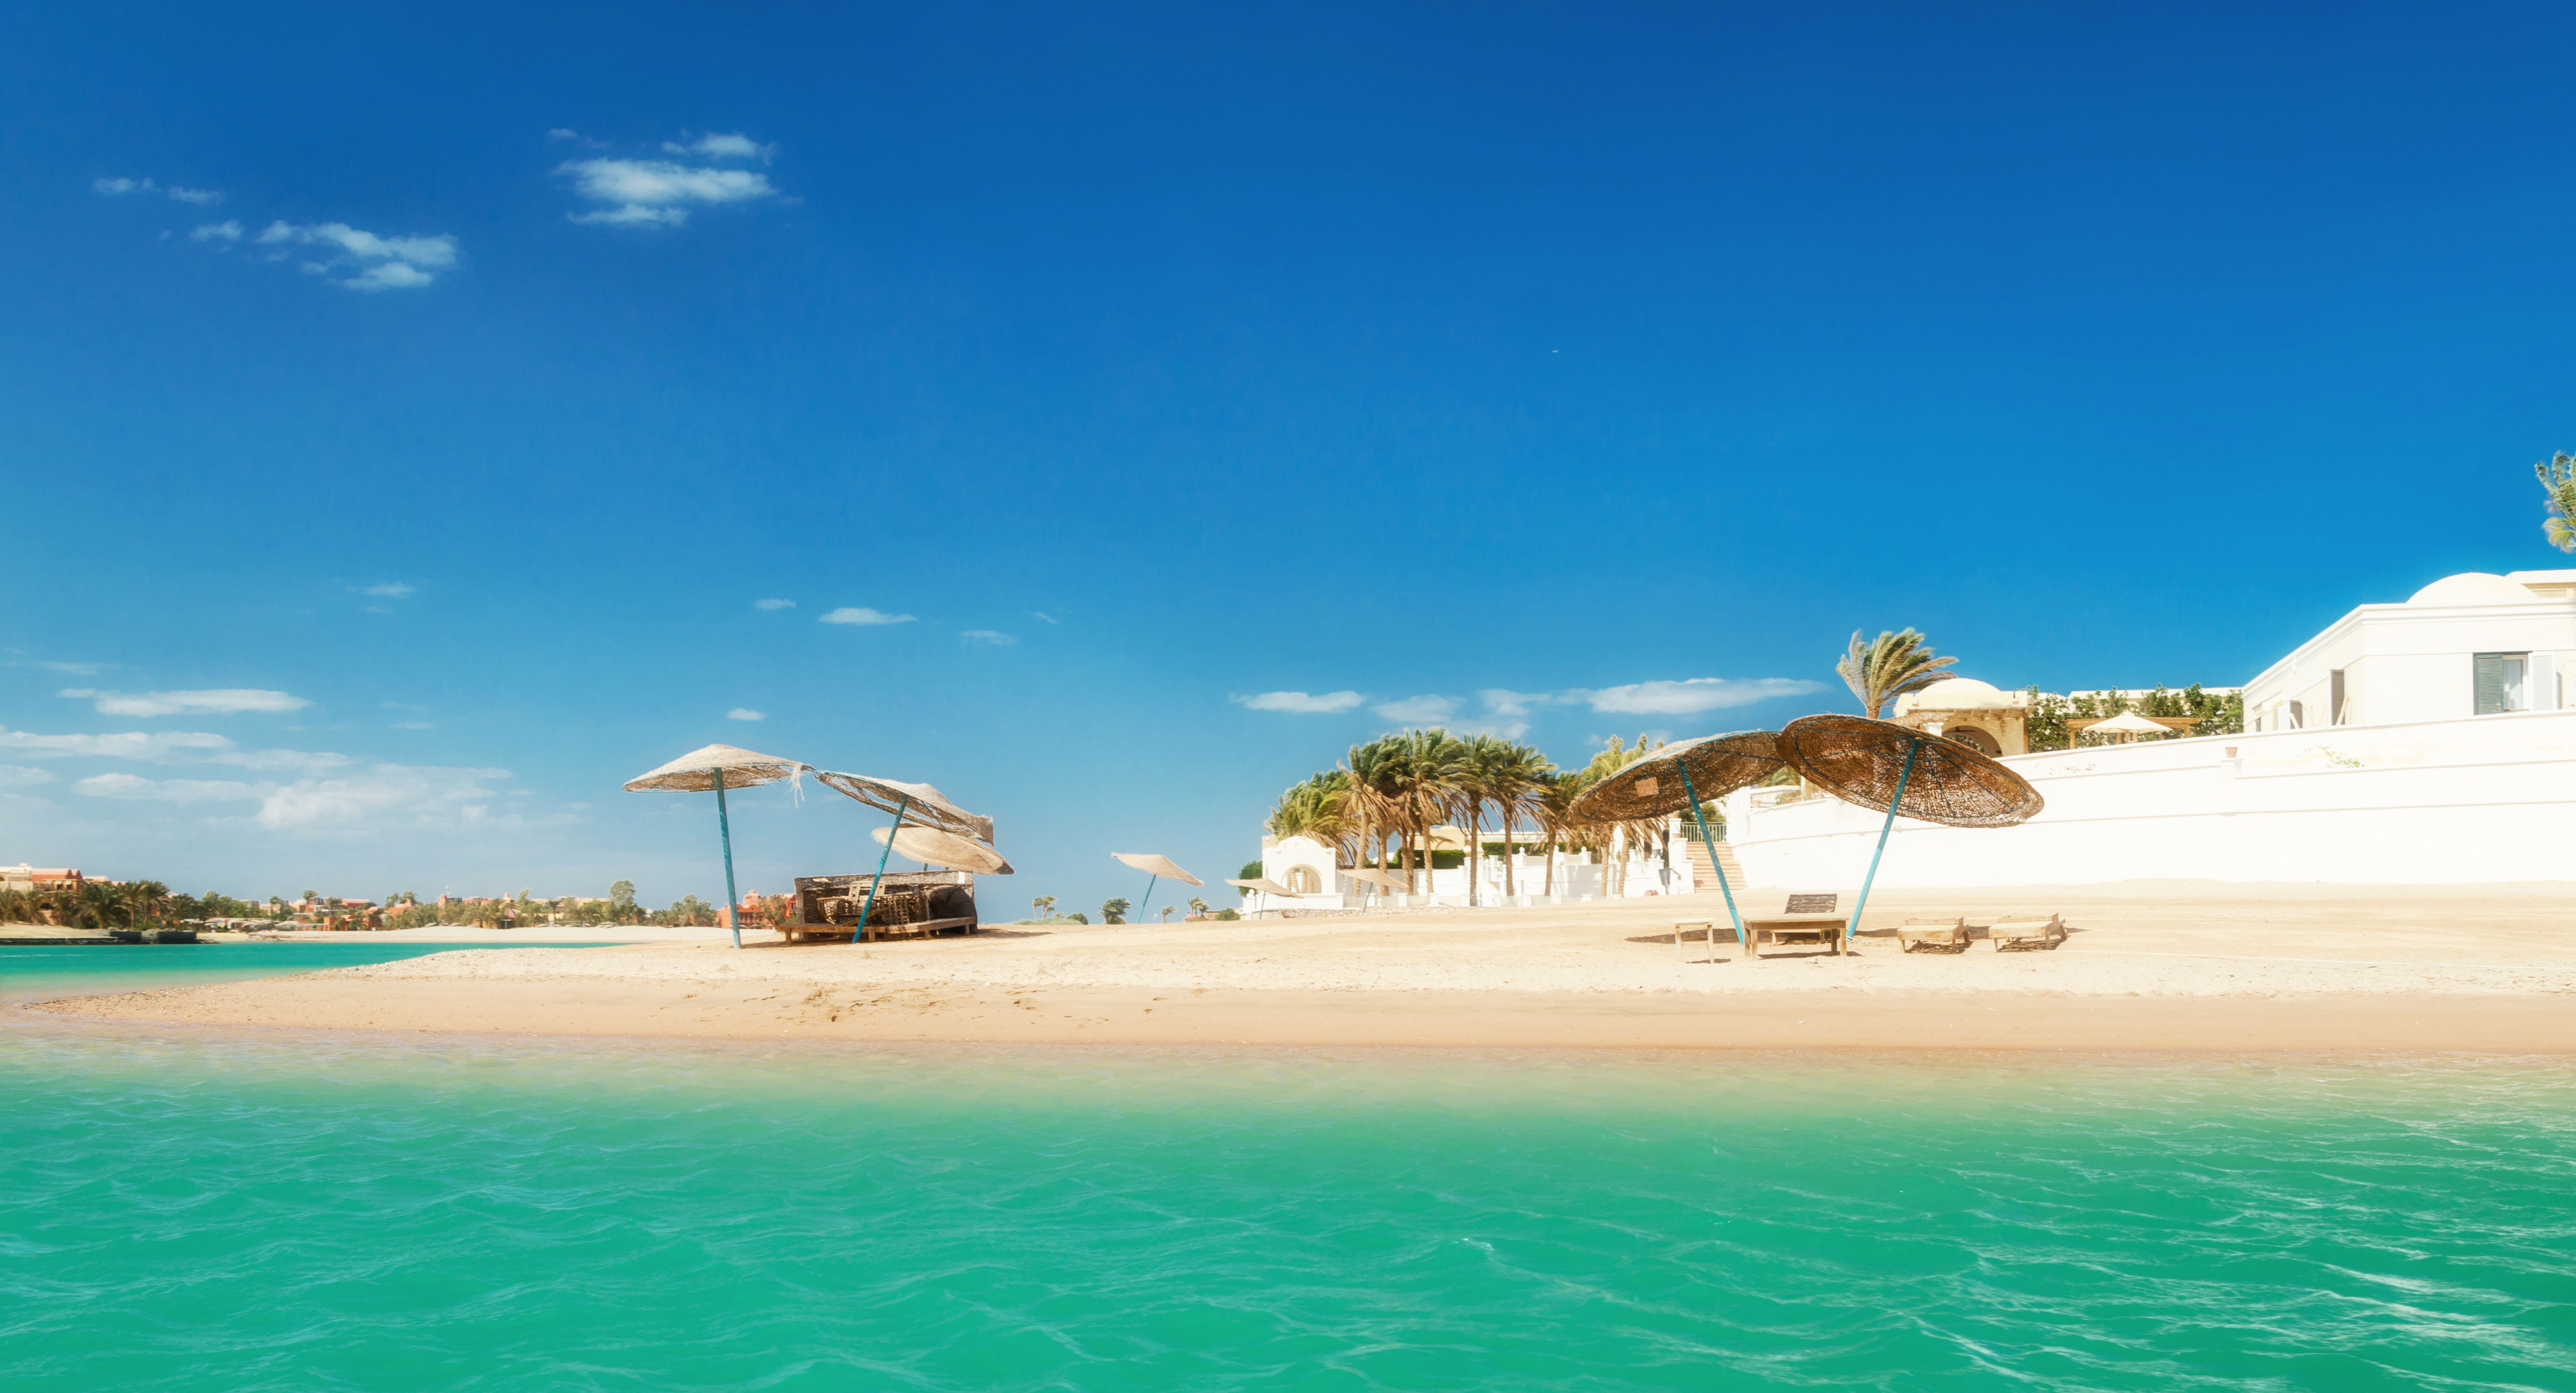 White sand beach resort on the Red Sea in El Gouna, Egypt.